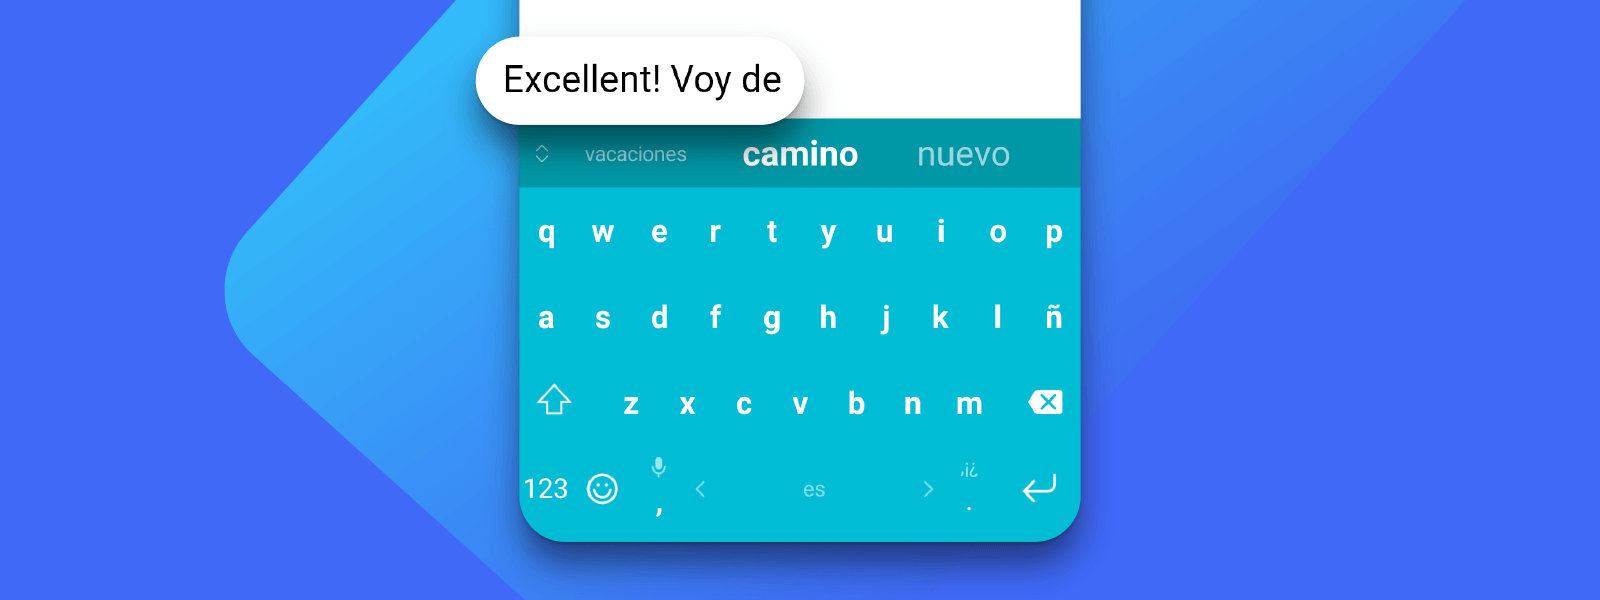 Dispositivo Android que utiliza SwiftKey para escribir en varios idiomas